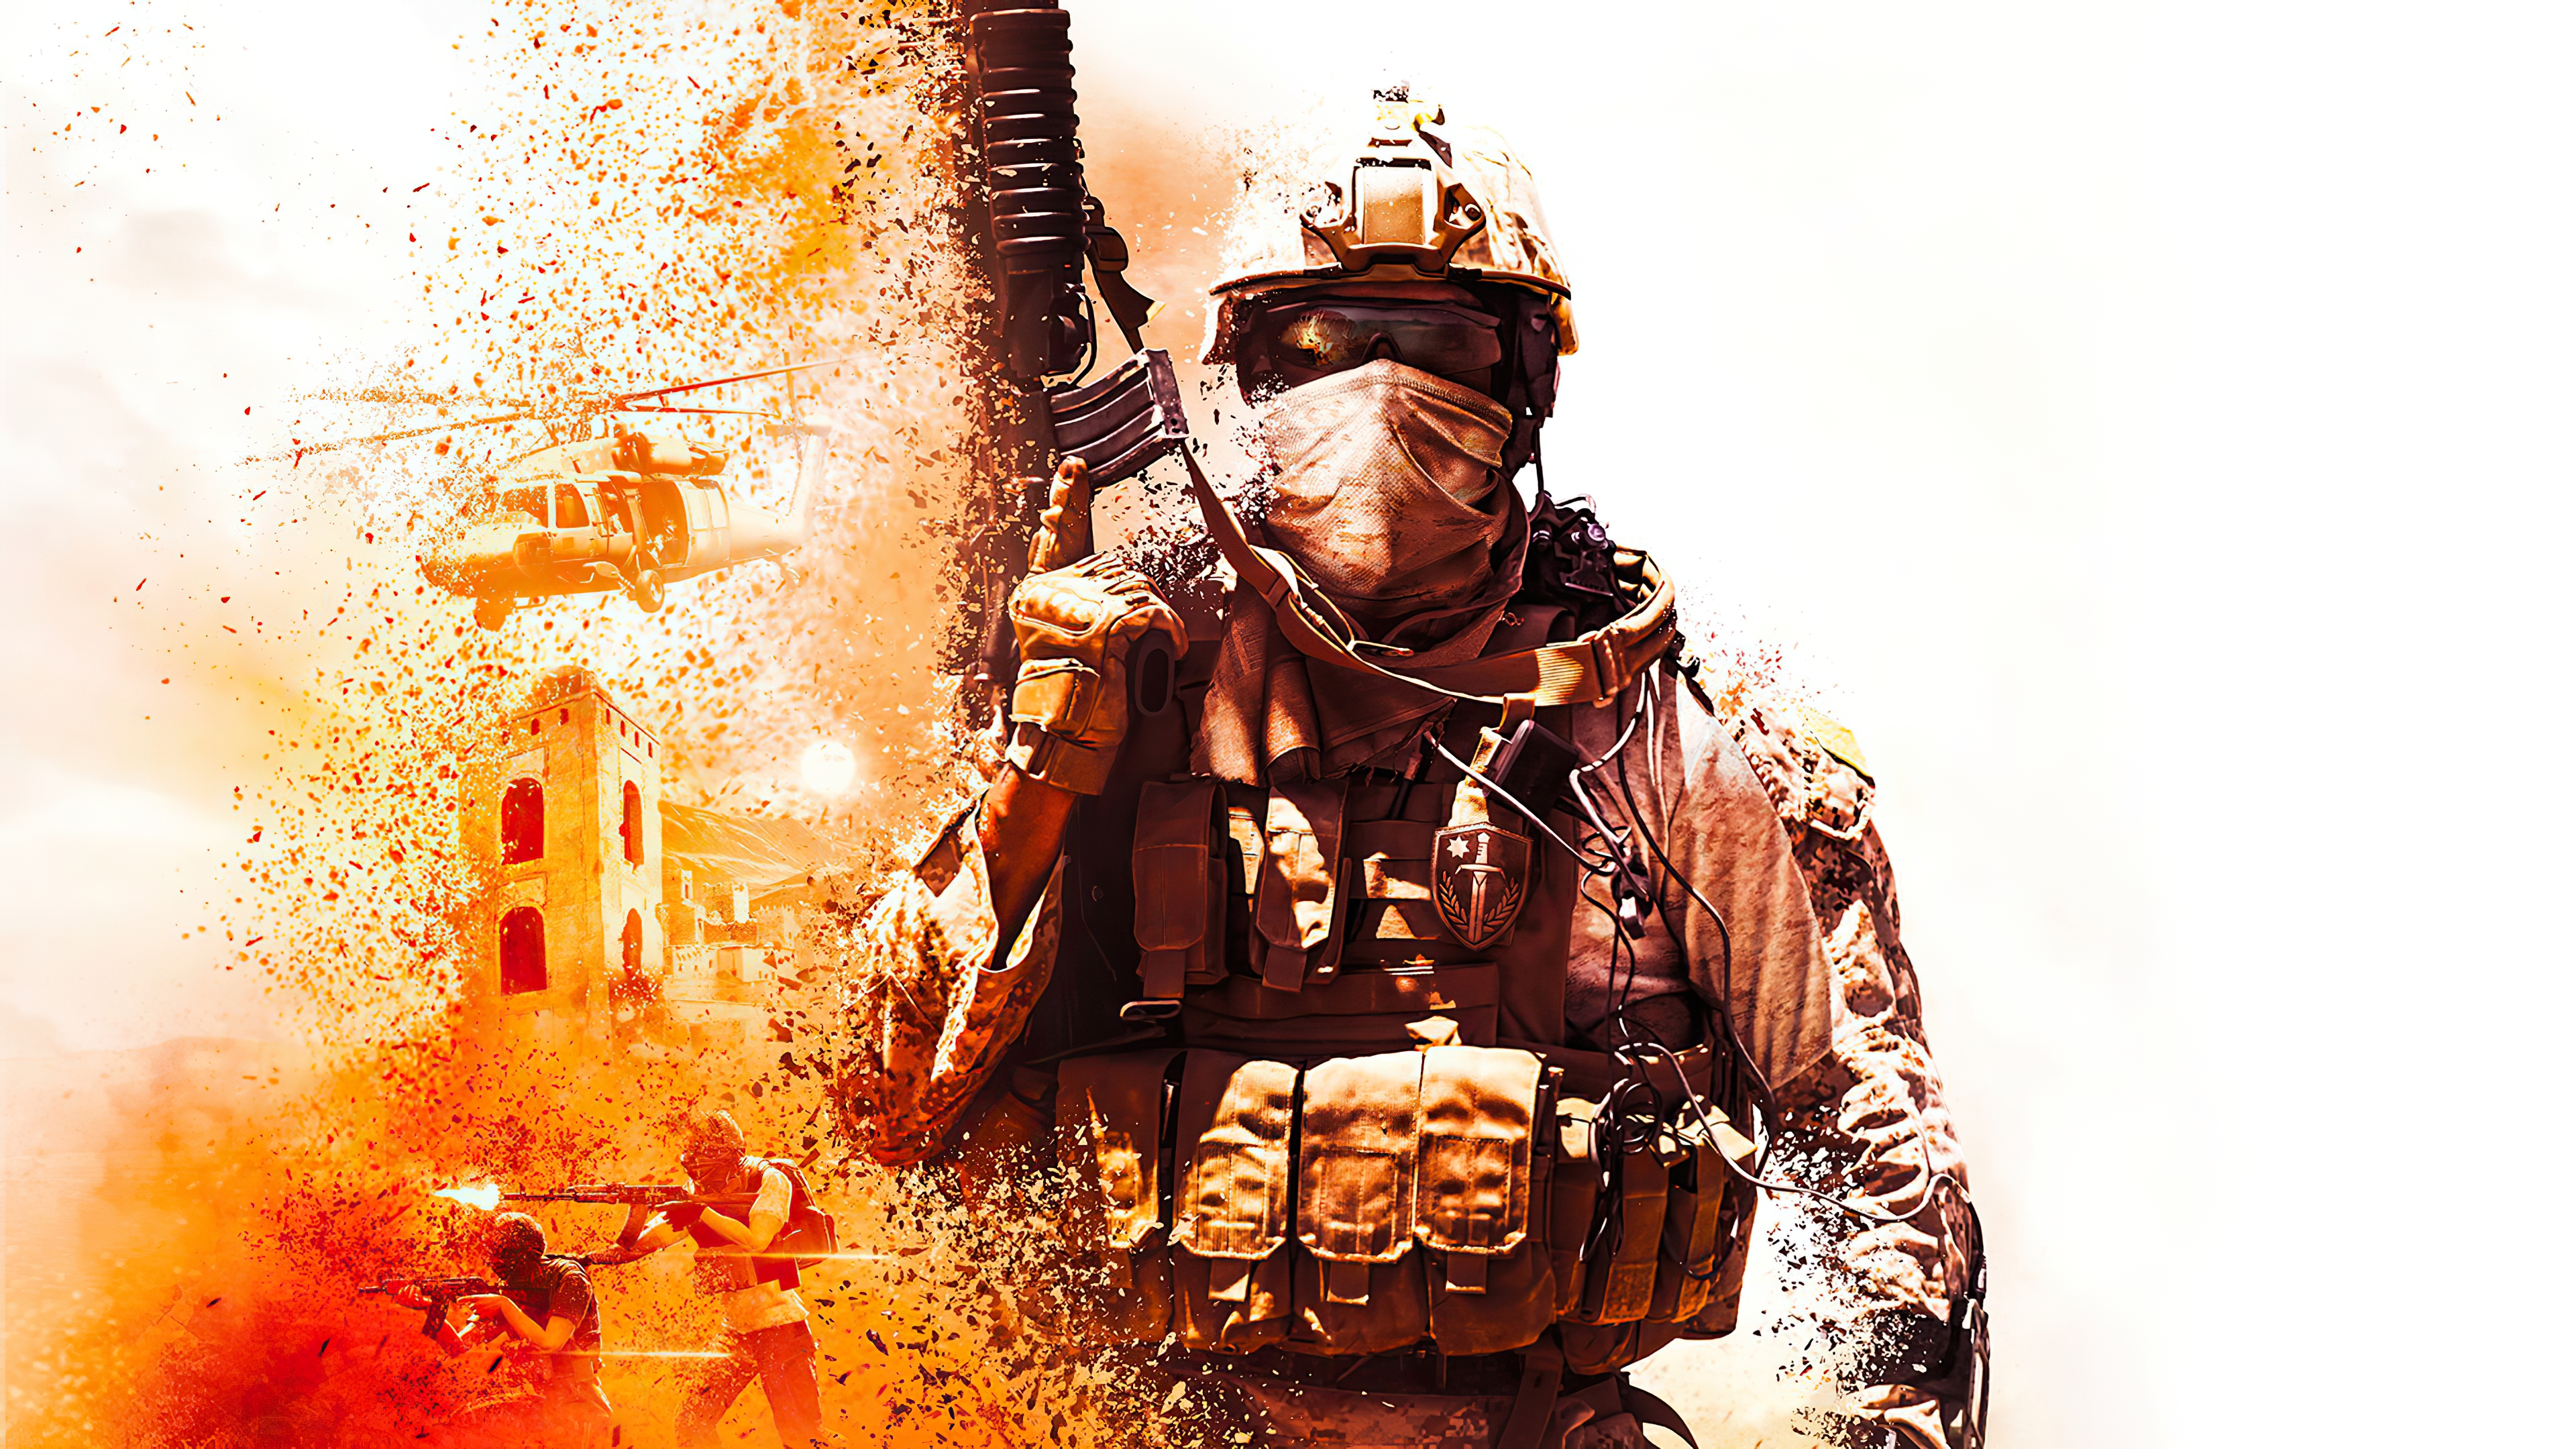 Wallpapers insurgency sandstorm soldiers games on the desktop